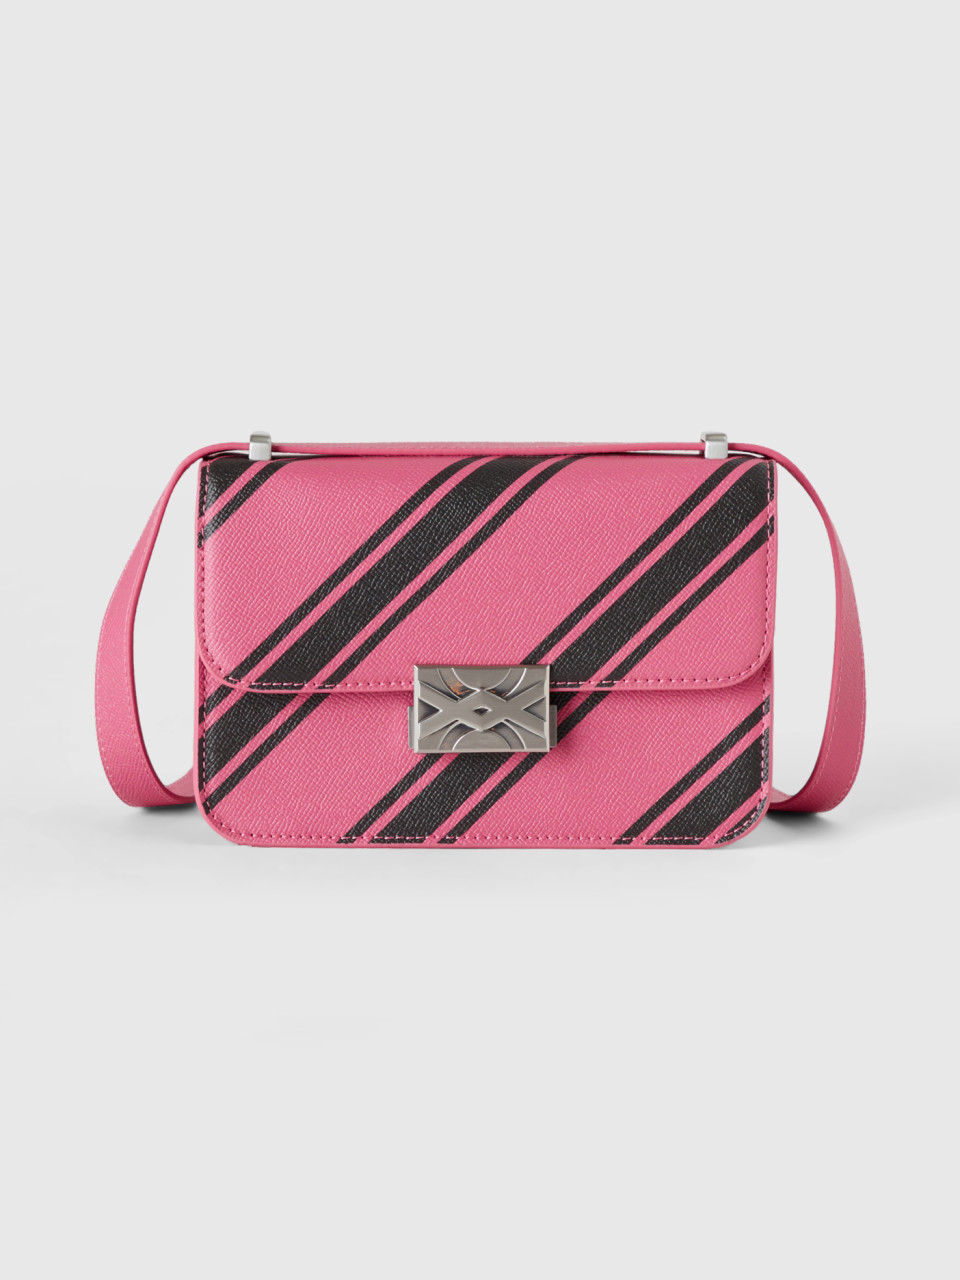 Benetton, Pink Bag With Regimental Stripes, Pink, Women